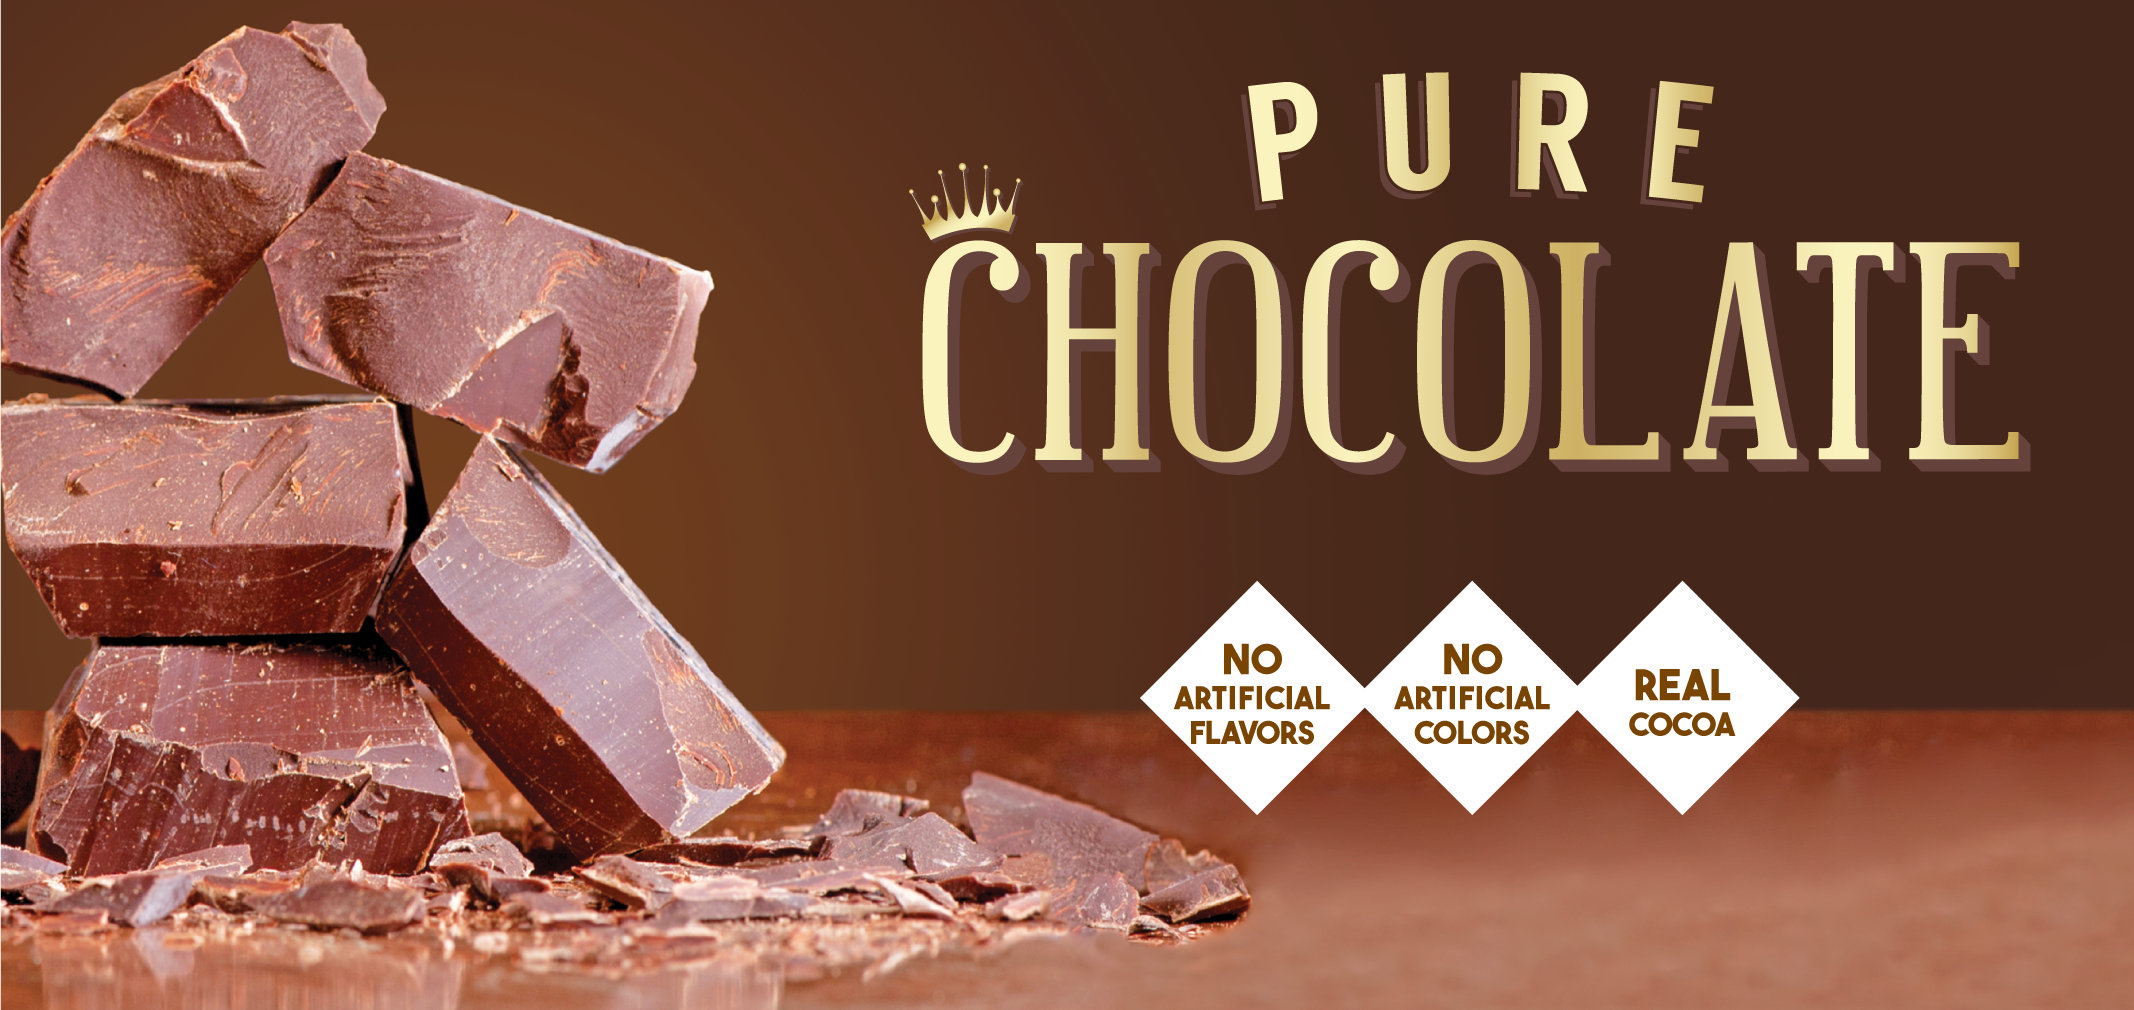 https://www.menchies.com/images/flavors/uploads/flavor-label/purechocolate_webflabel1.png